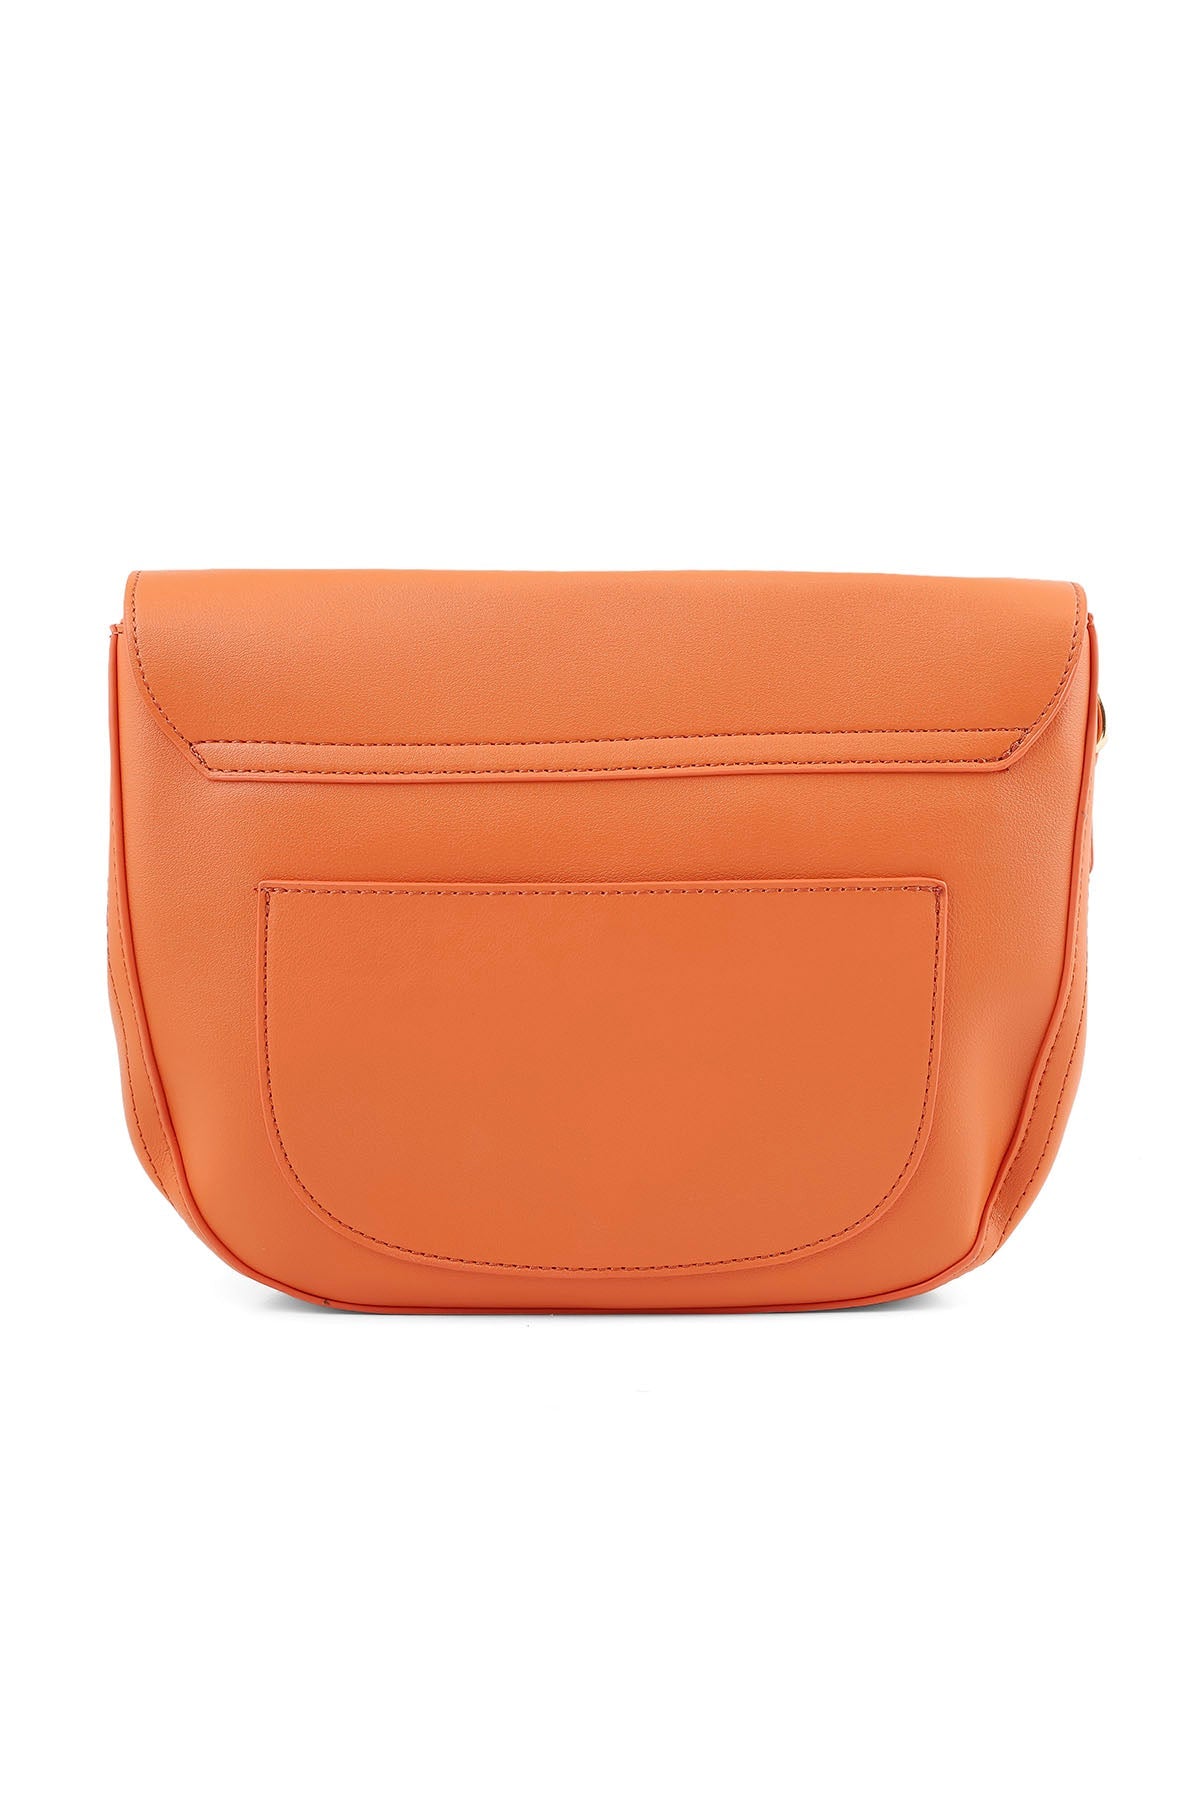 Cross Shoulder Bags B15065-Orange